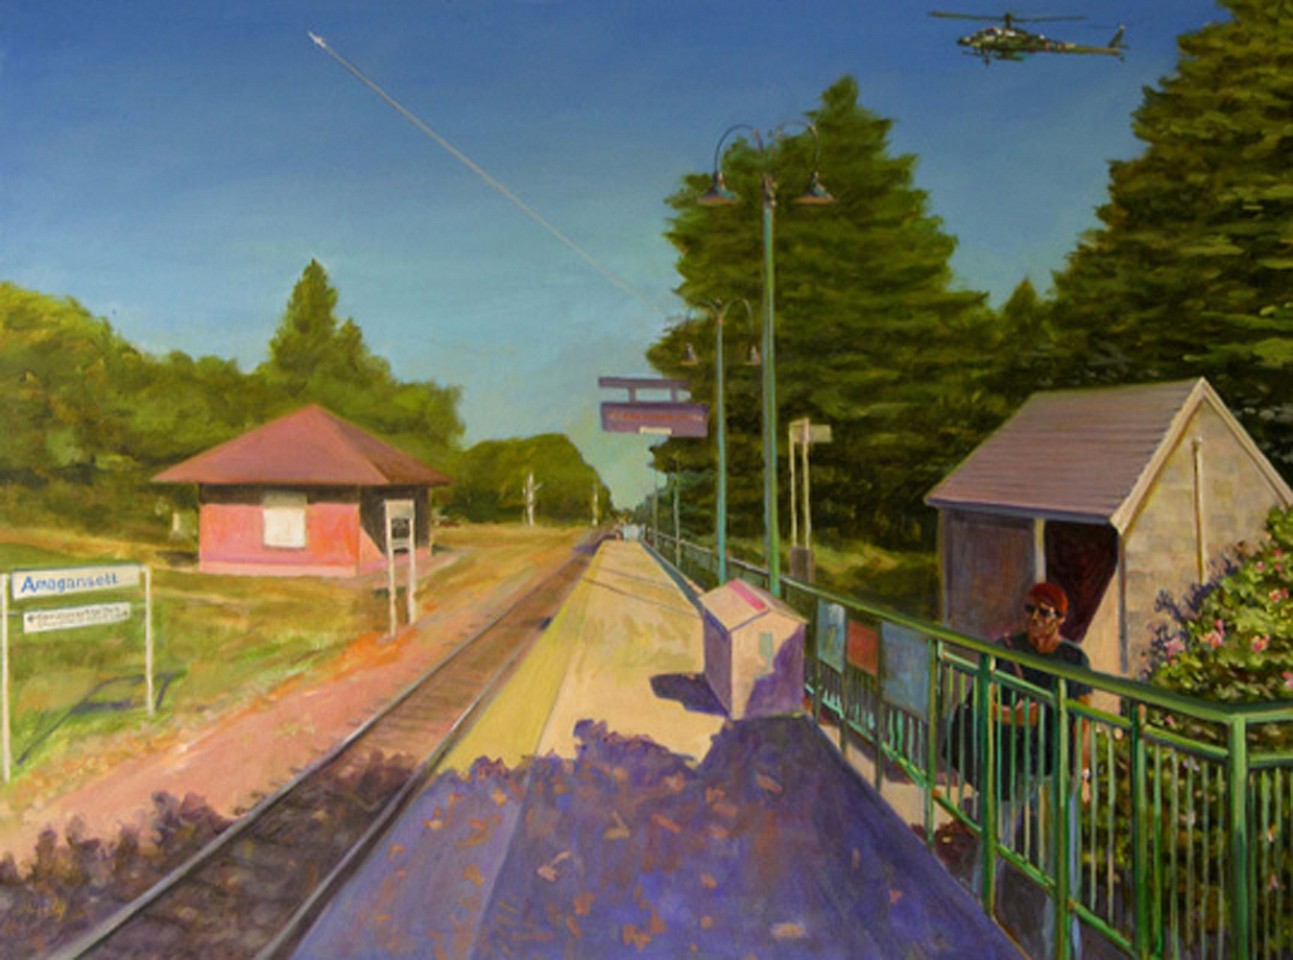 John Hardy, Amagansett Station, 2006
Oil on Canvas, 36 x 48 inches
HARD0015